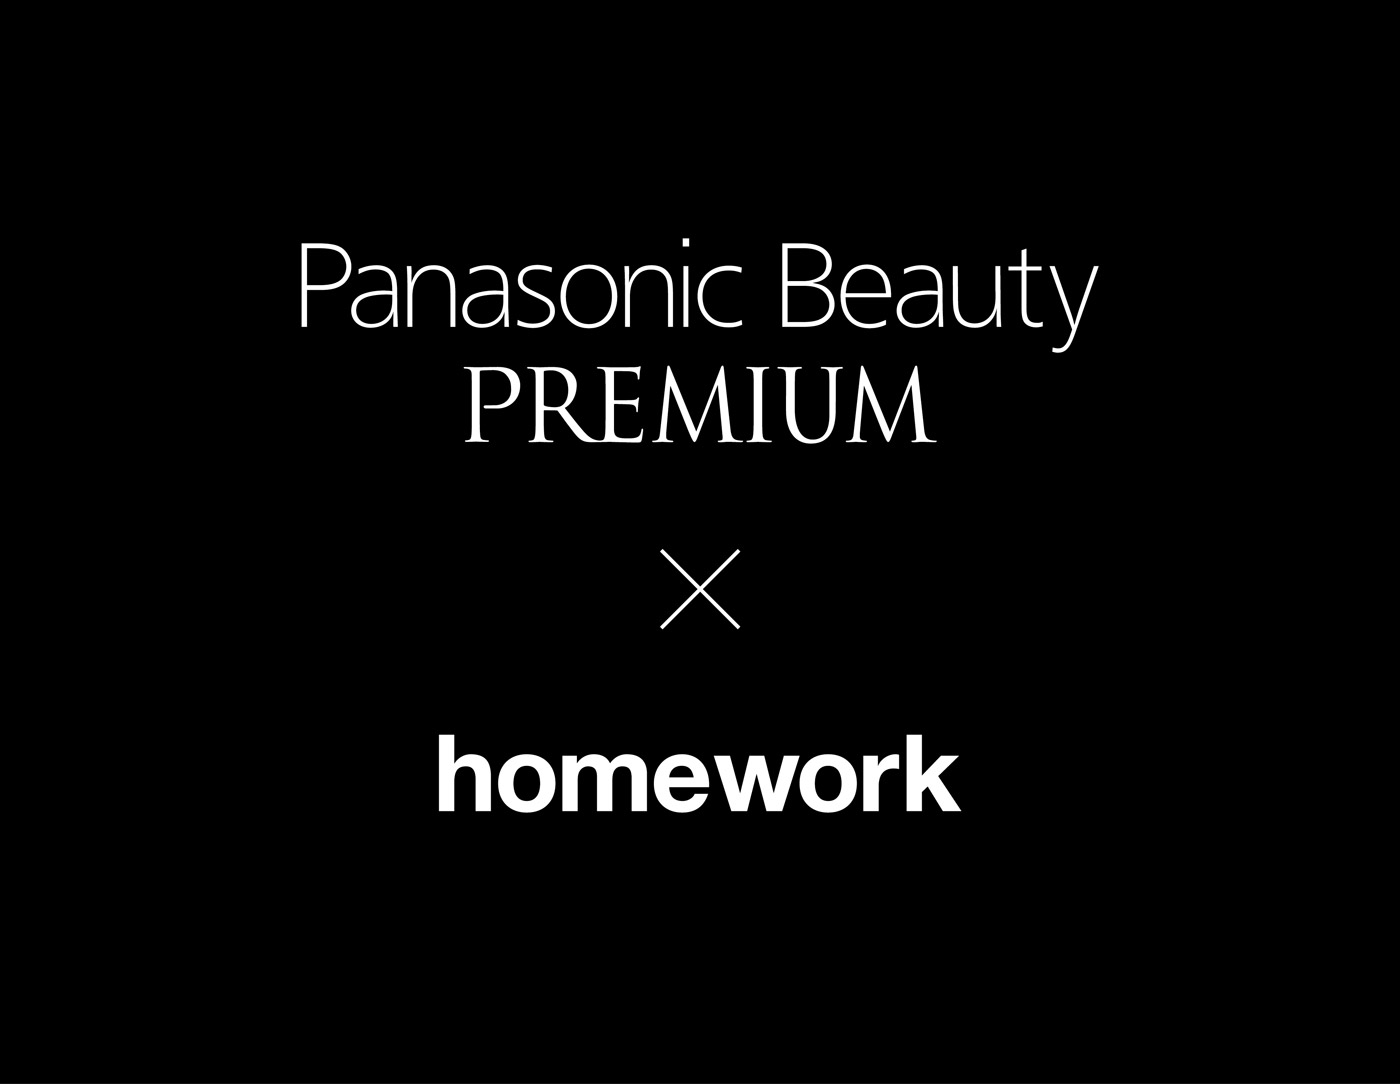 Panasonic Beauty – Artwork consulting 2015